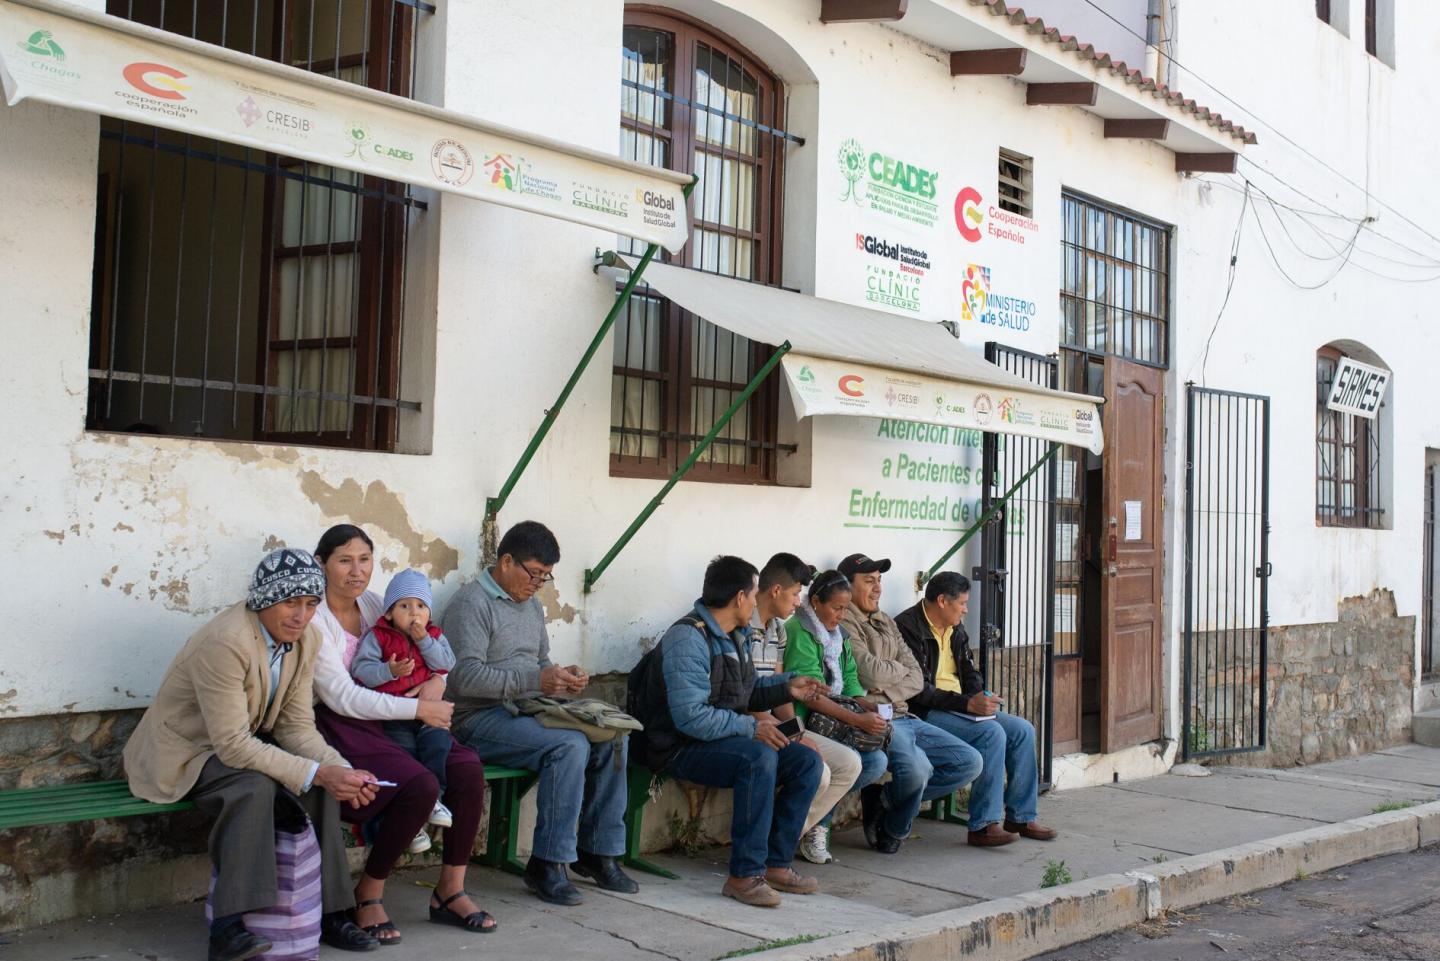 Bolivian Platform for Chagas Disease